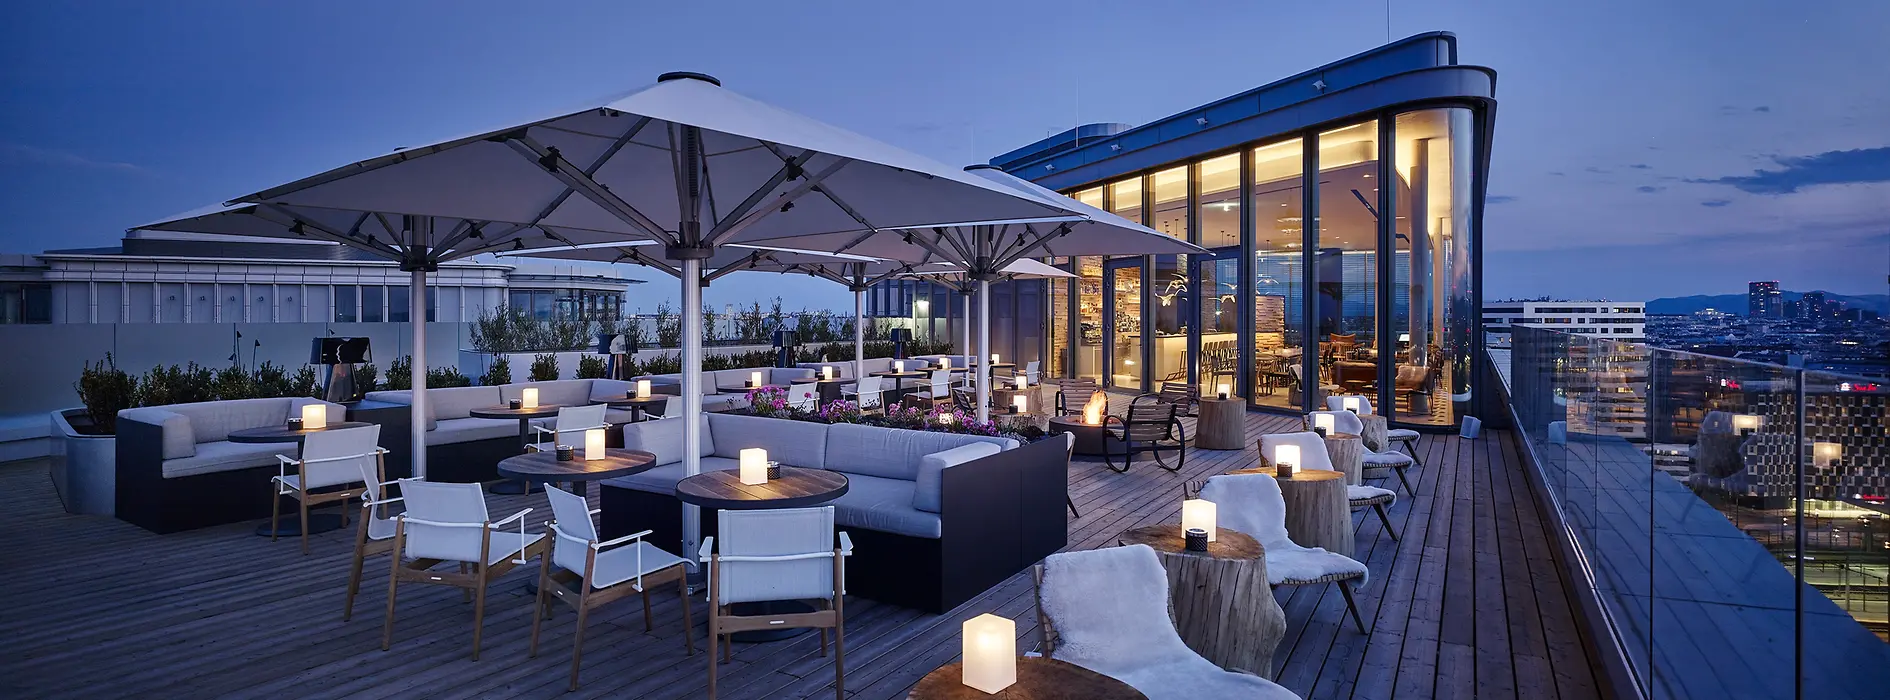 Rooftop bar Aurora, Andaz Vienna Am Belvedere, terrace, evening atmosphere 